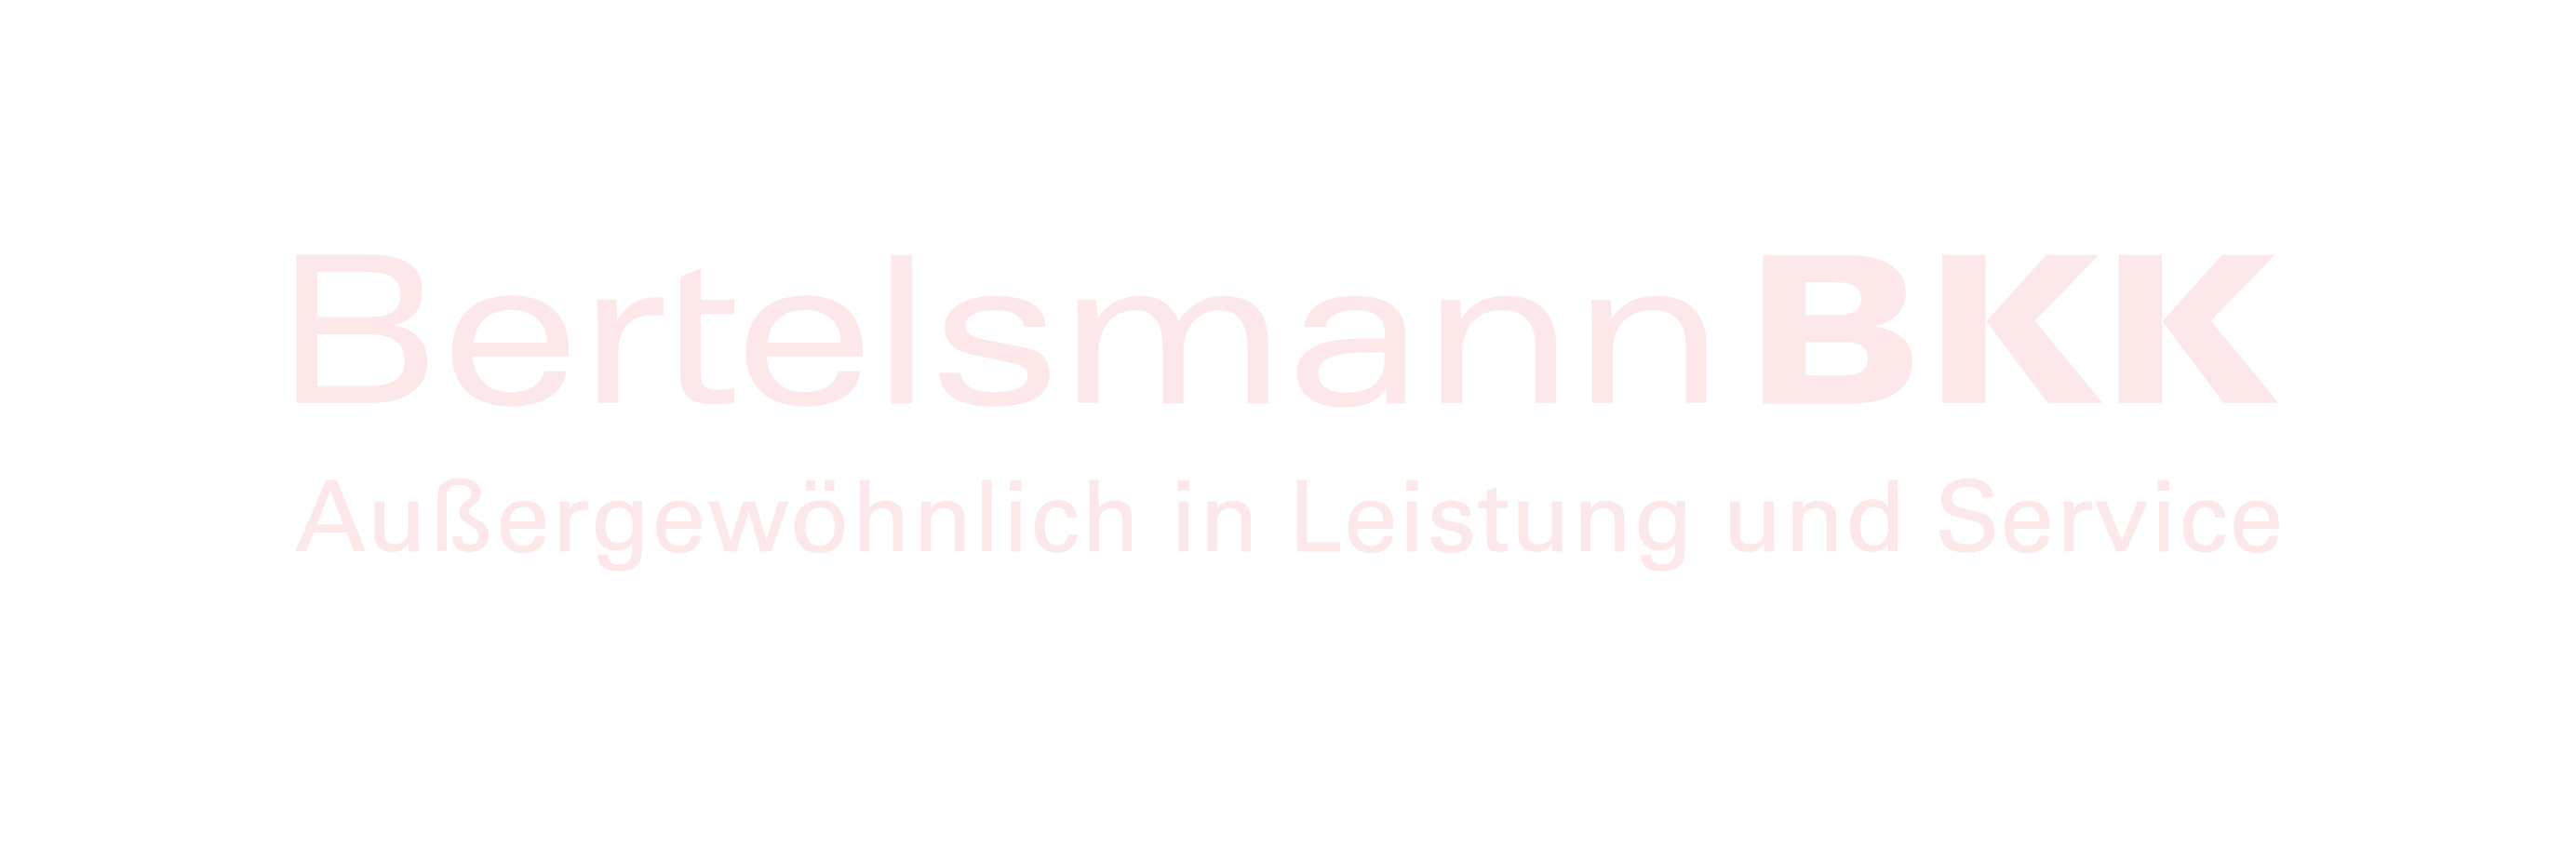 Bertelsmann logo rosa